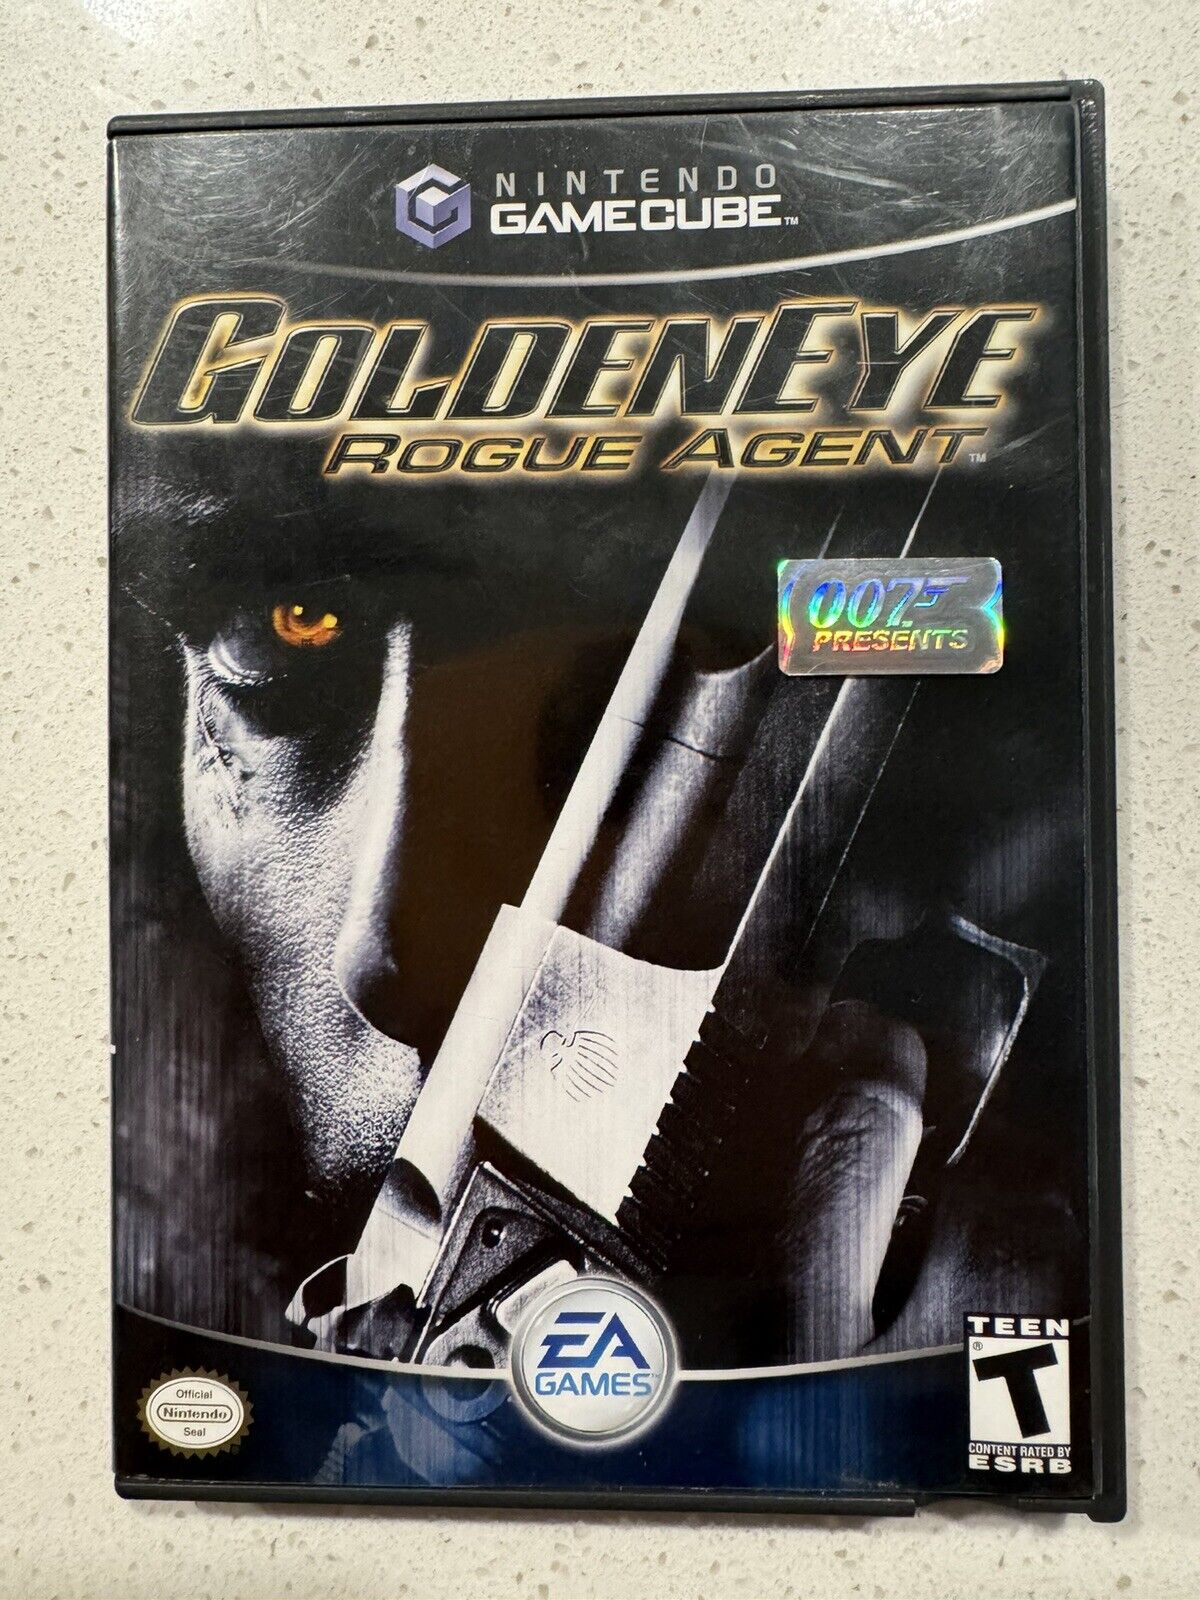 GoldenEye: Rogue Agent - Nintendo GameCube